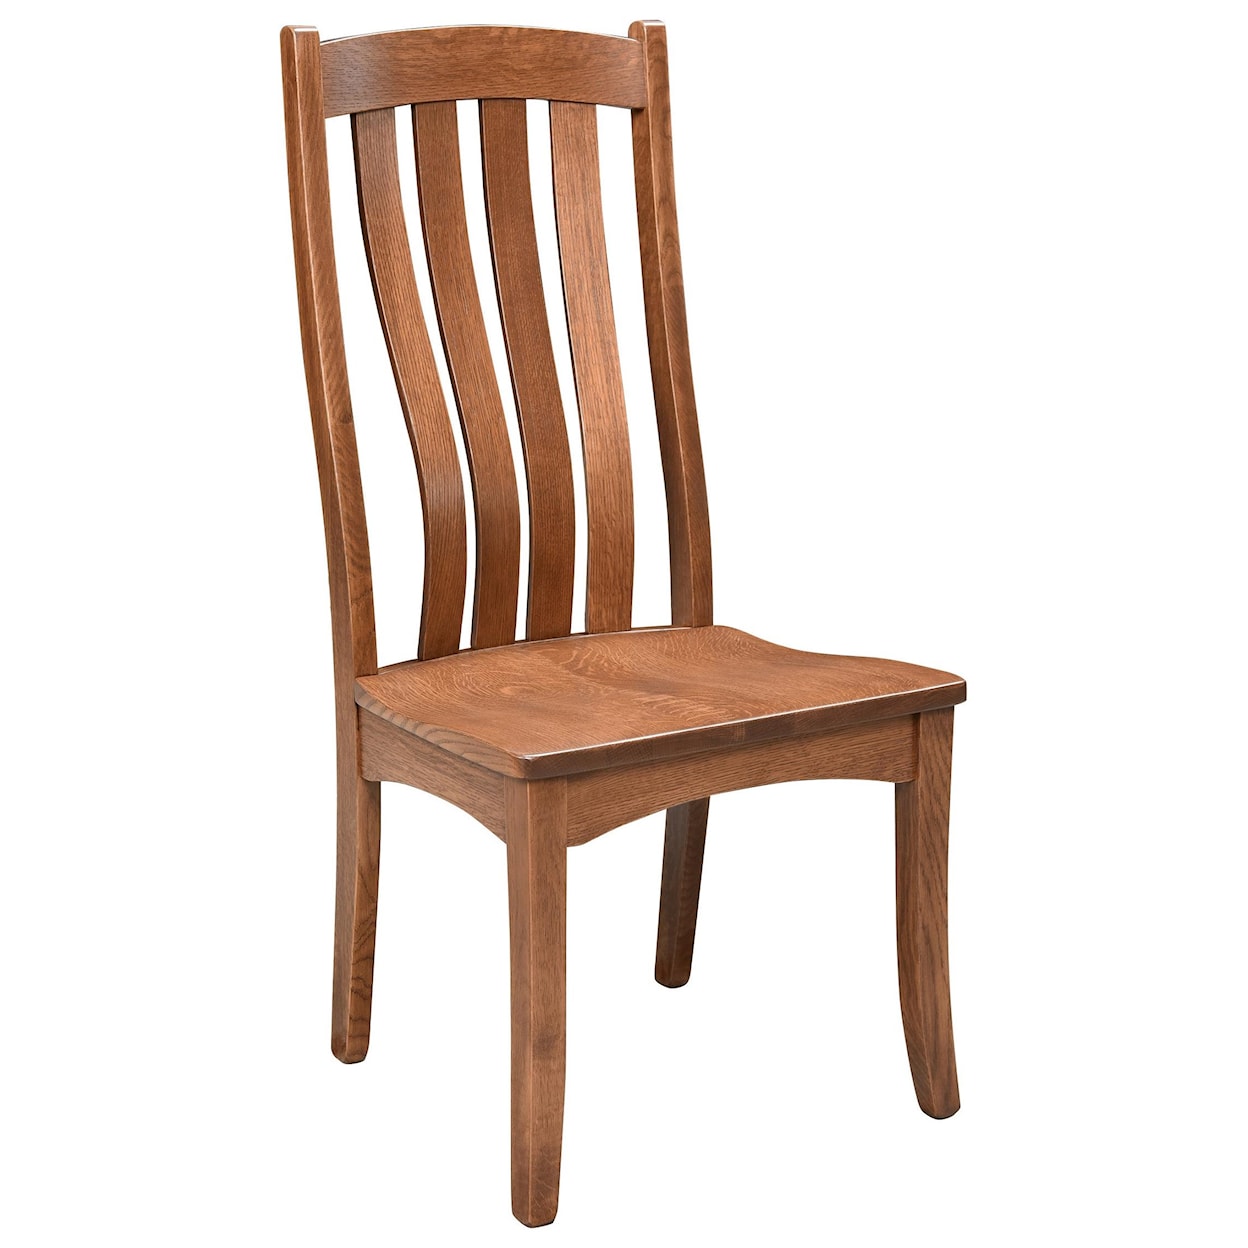 Wengerd Wood Products Buckeye Side Chair